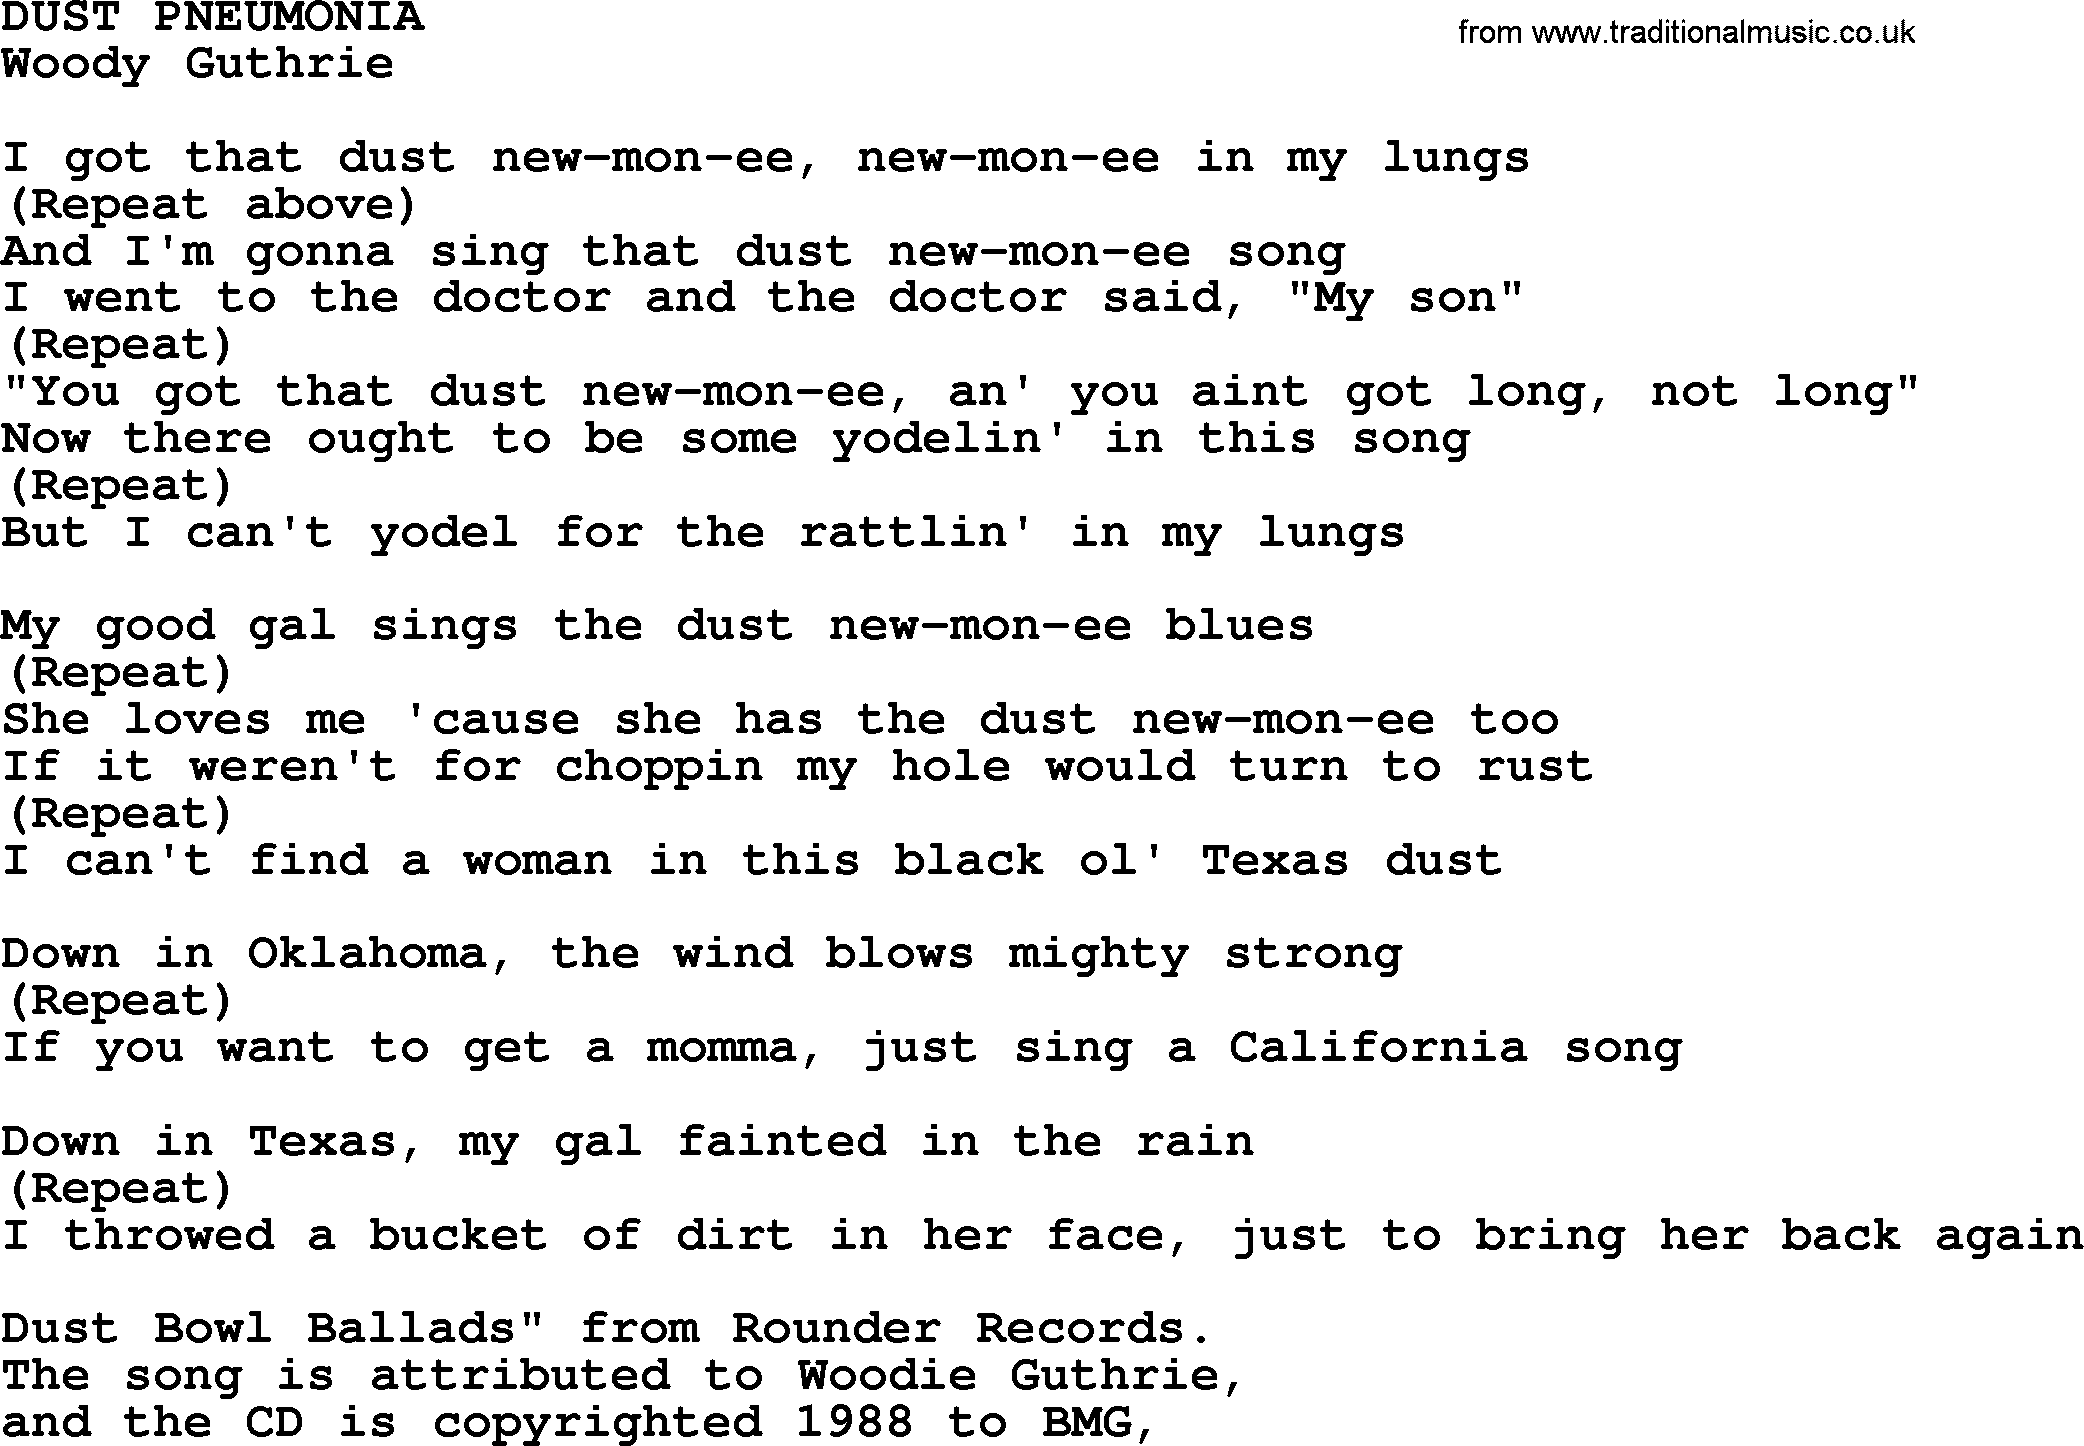 Woody Guthrie song Dust Pneumonia lyrics